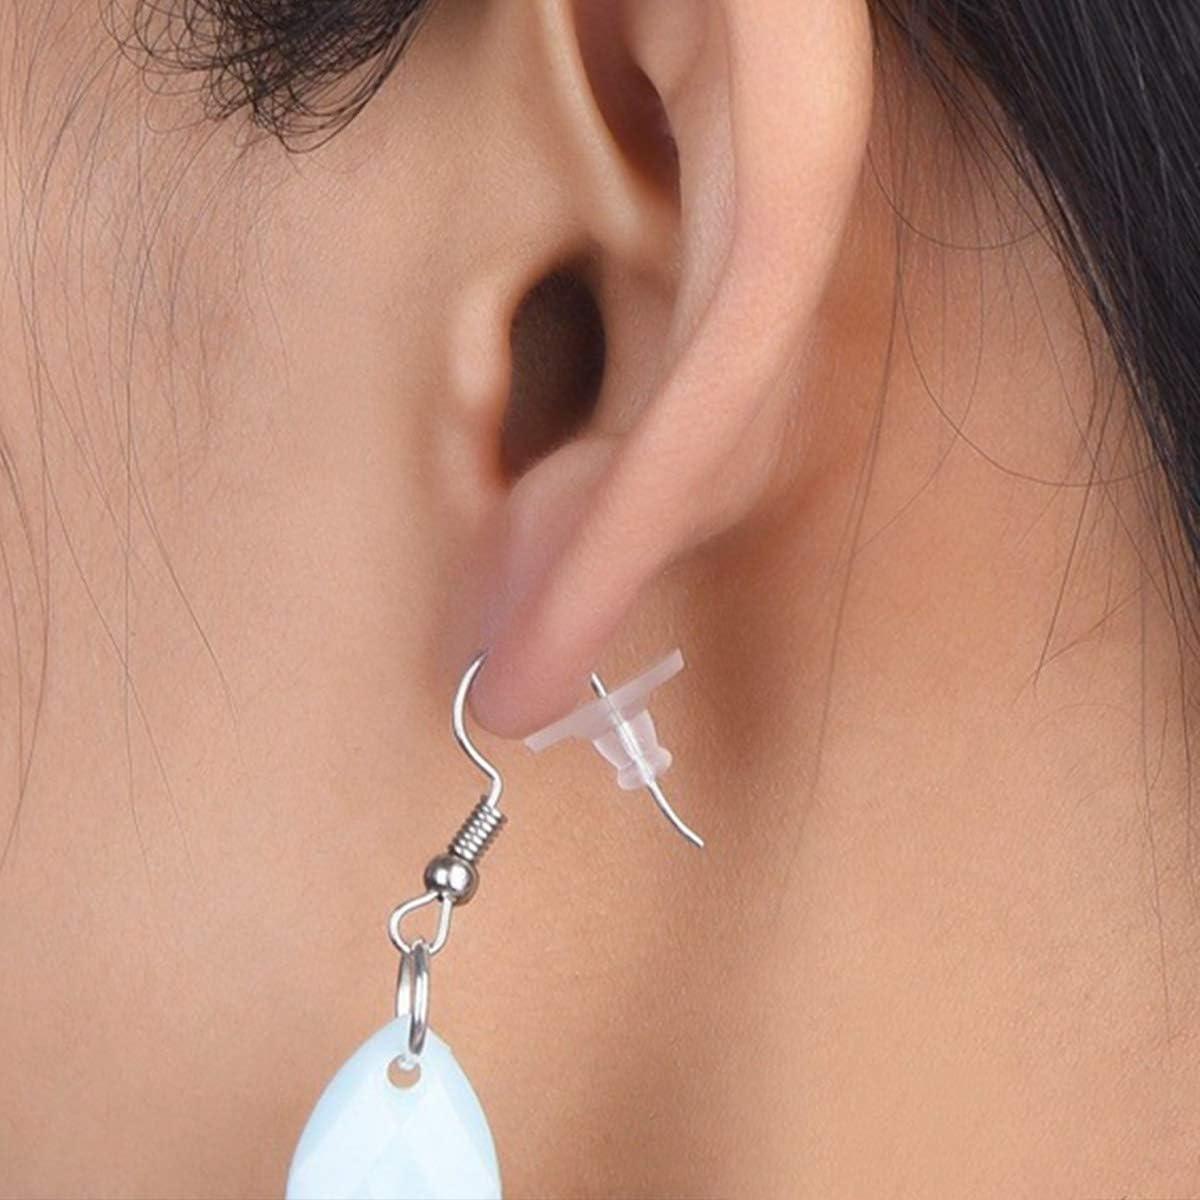 100 Pcs Plastic Earring Backs Secure Push-Back Earring Stoppers